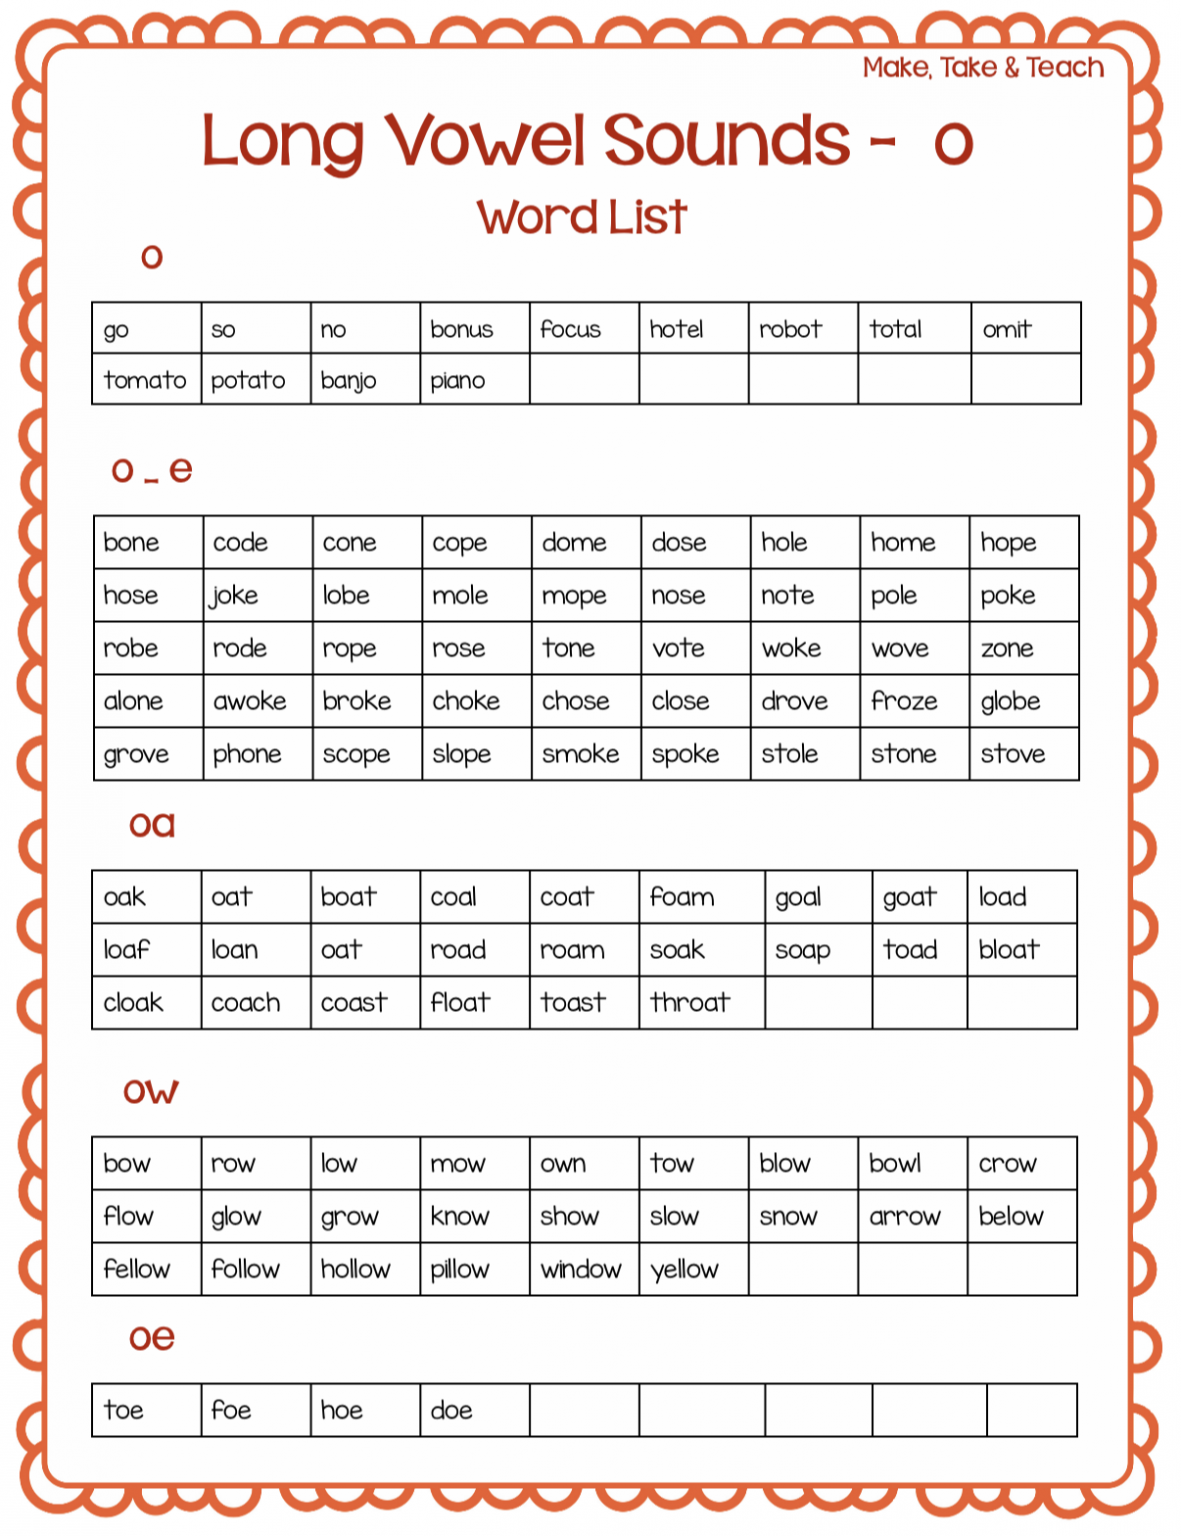 free-long-vowel-spelling-word-lists-make-take-teach